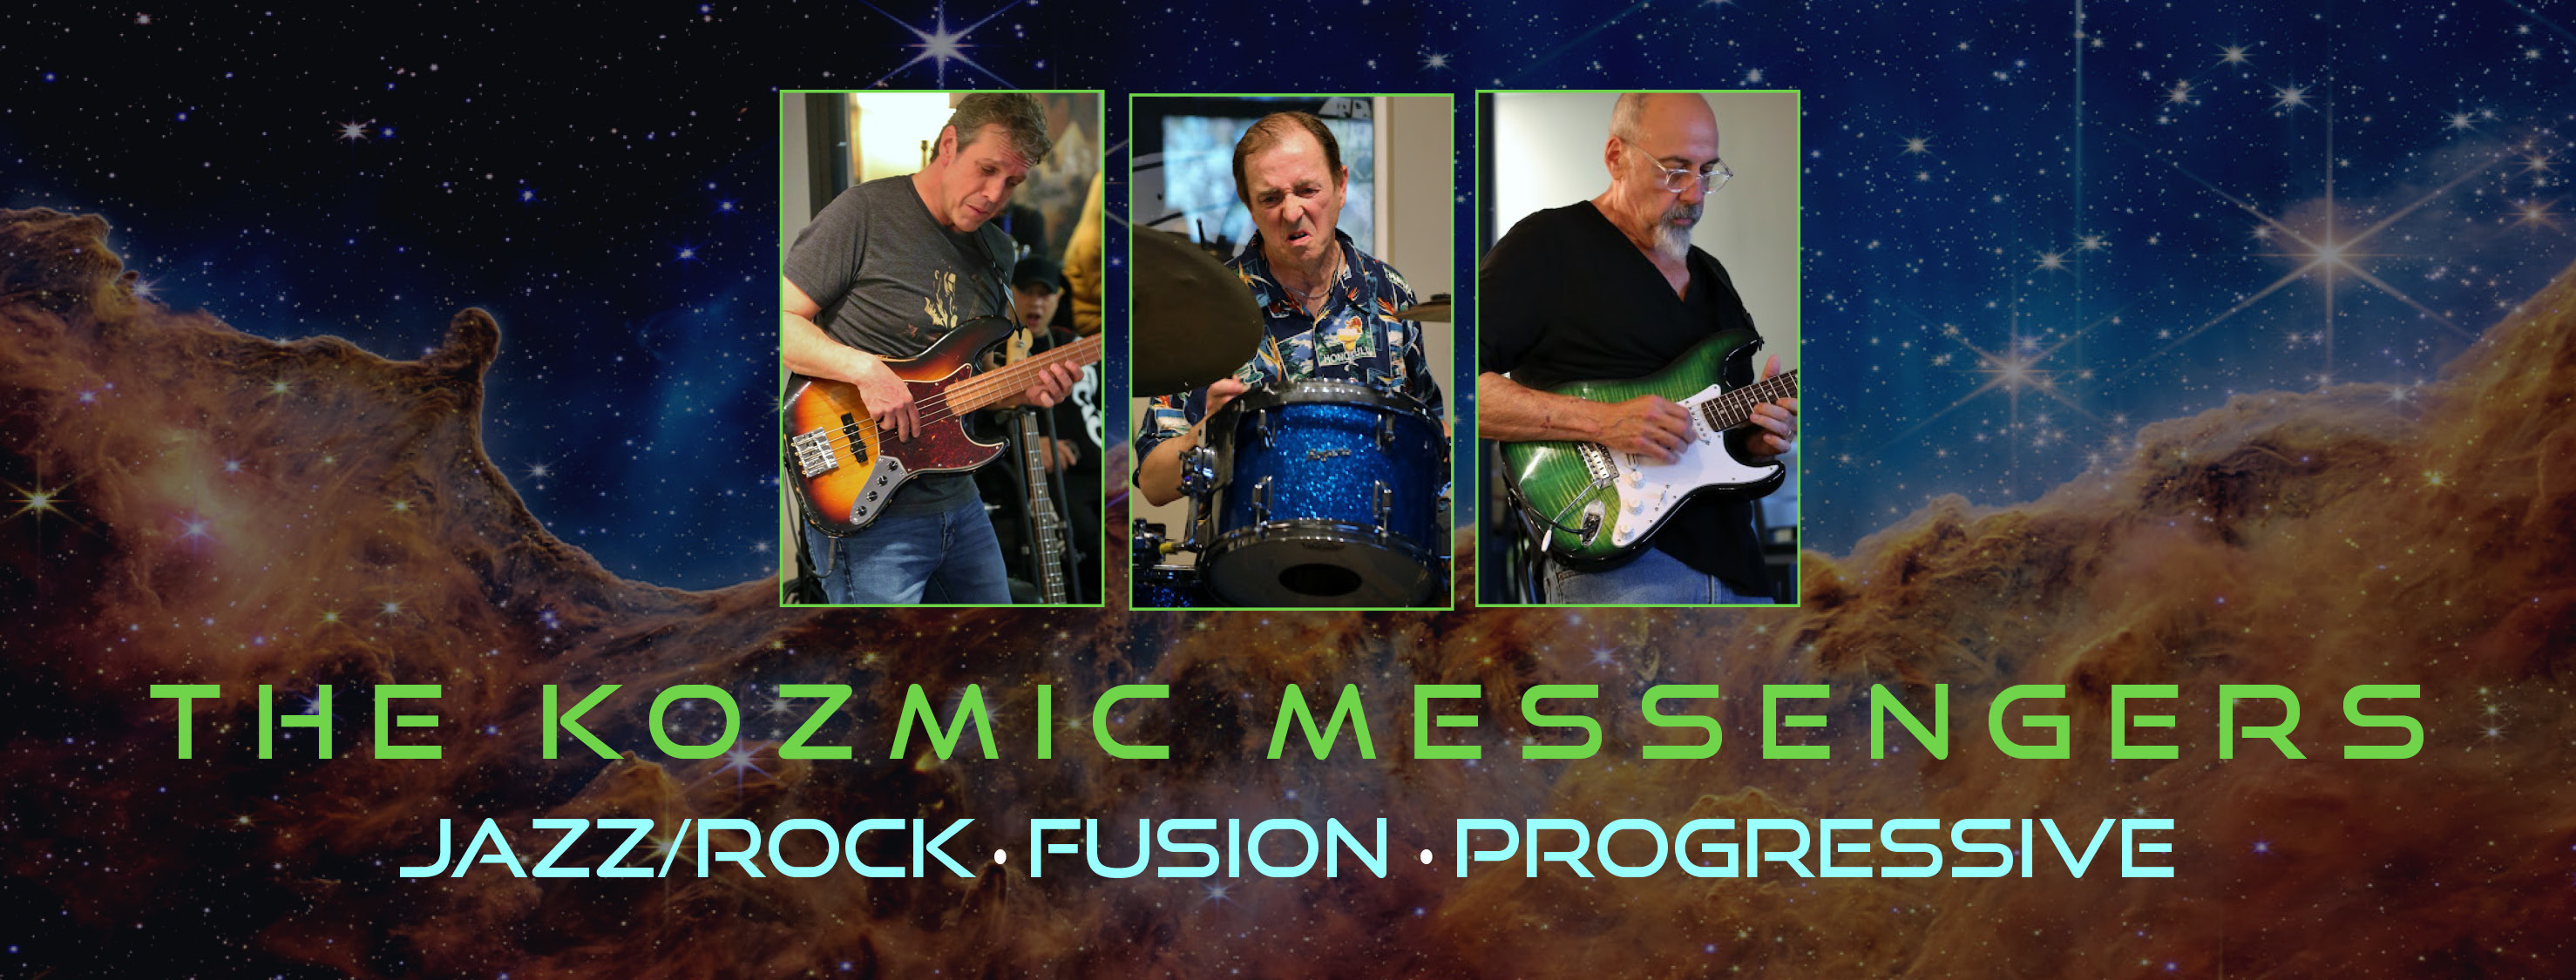 The Kozmic Messengers